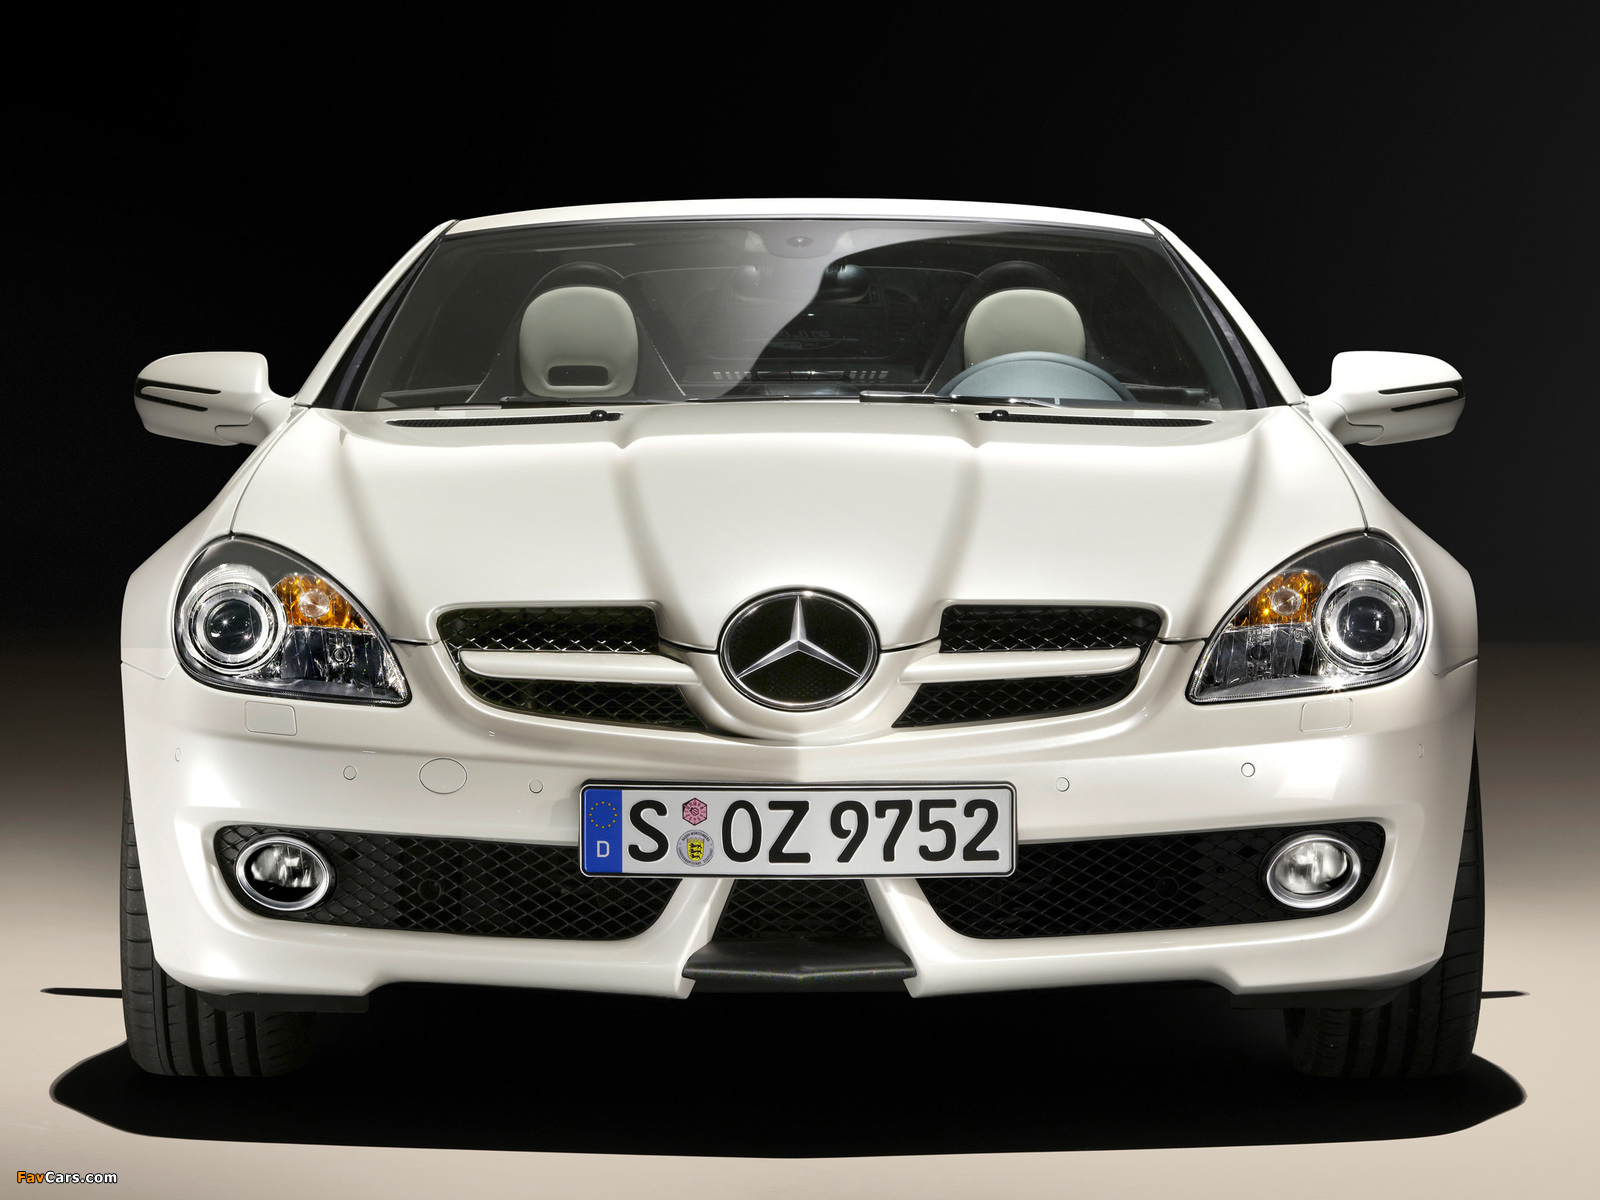 Mercedes-Benz SLK 350 2LOOK Edition (R171) 2009 photos (1600 x 1200)